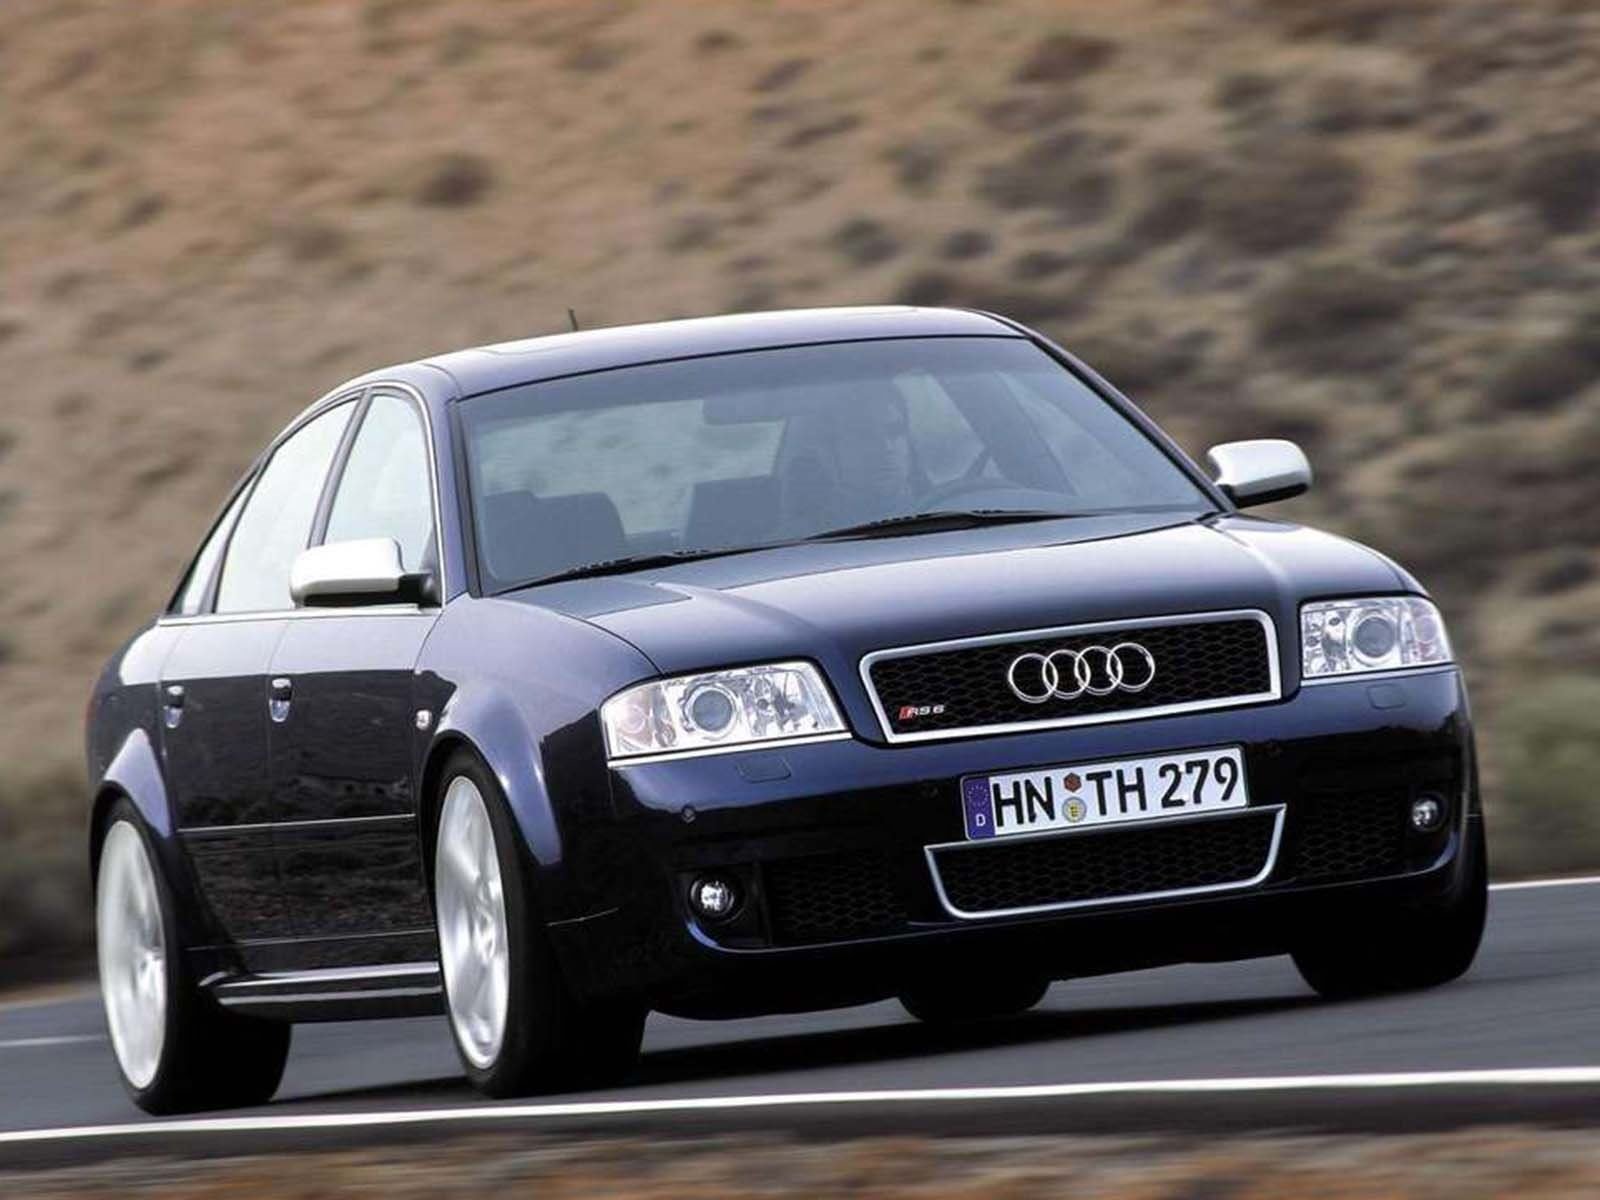 Audi a6 c5 двери. Audi rs6 2002. Ауди rs6 c5. Audi rs6 c5 sedan. Ауди РС 6 2002 седан.